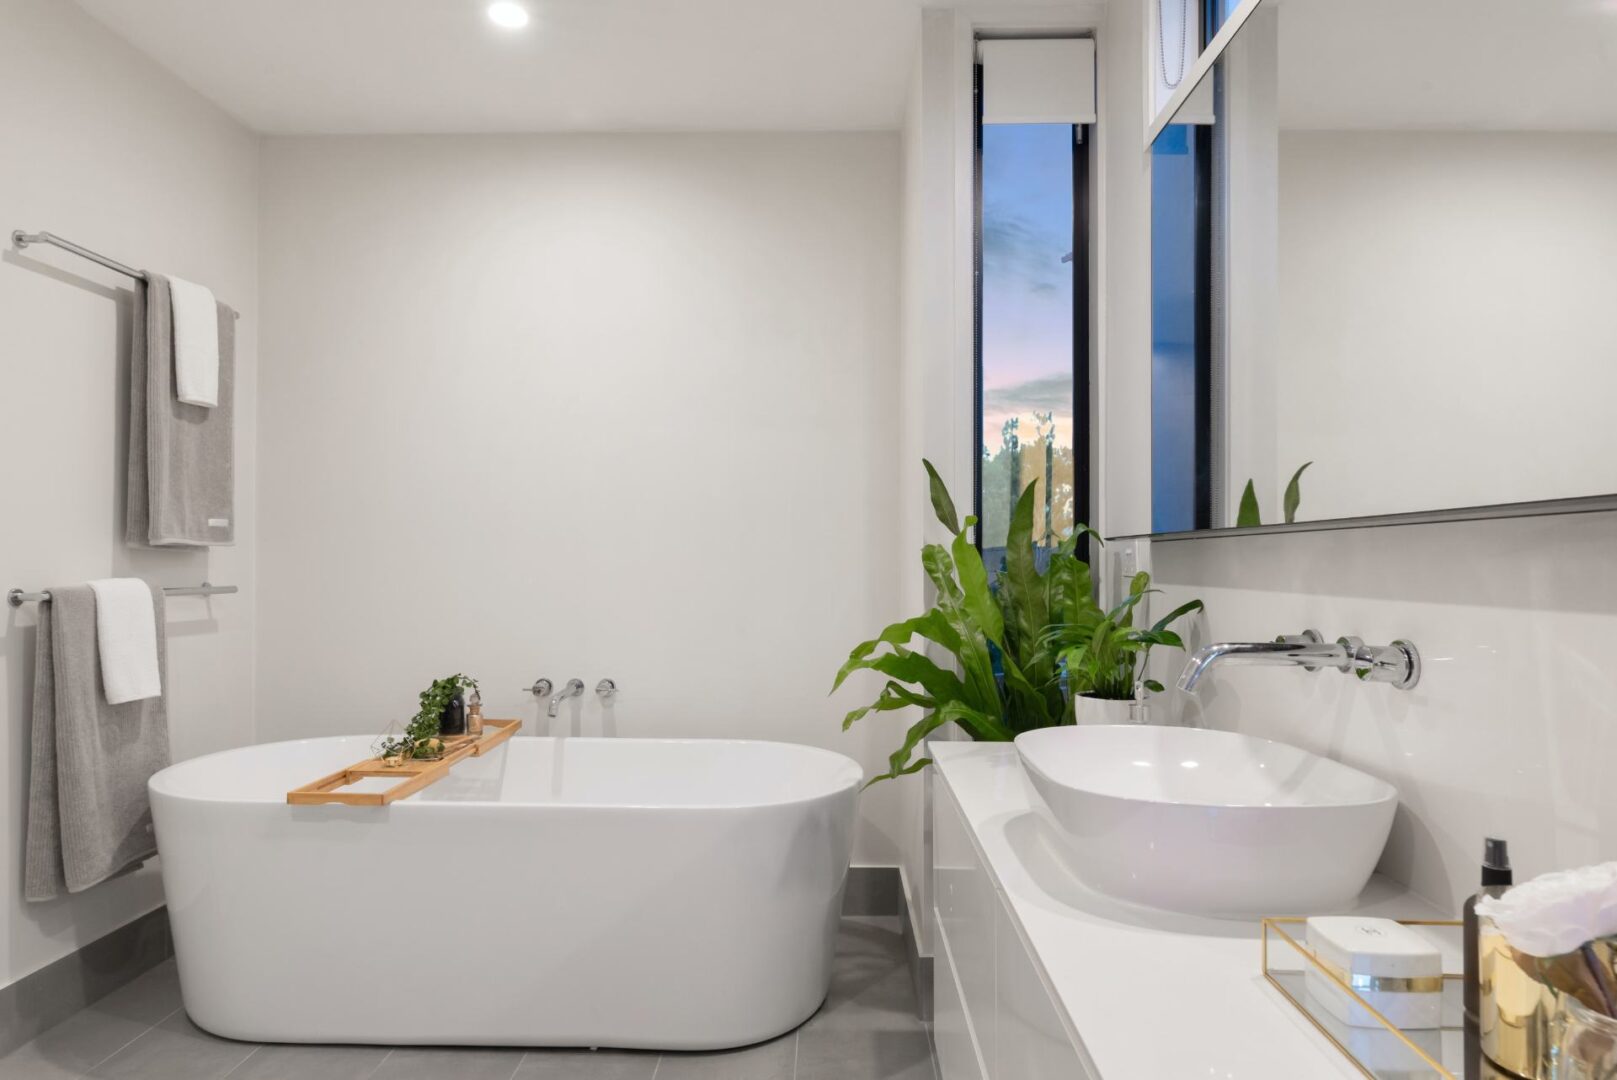 Interior Shot Of Stylish Modern Bathroom With Shower And Bath